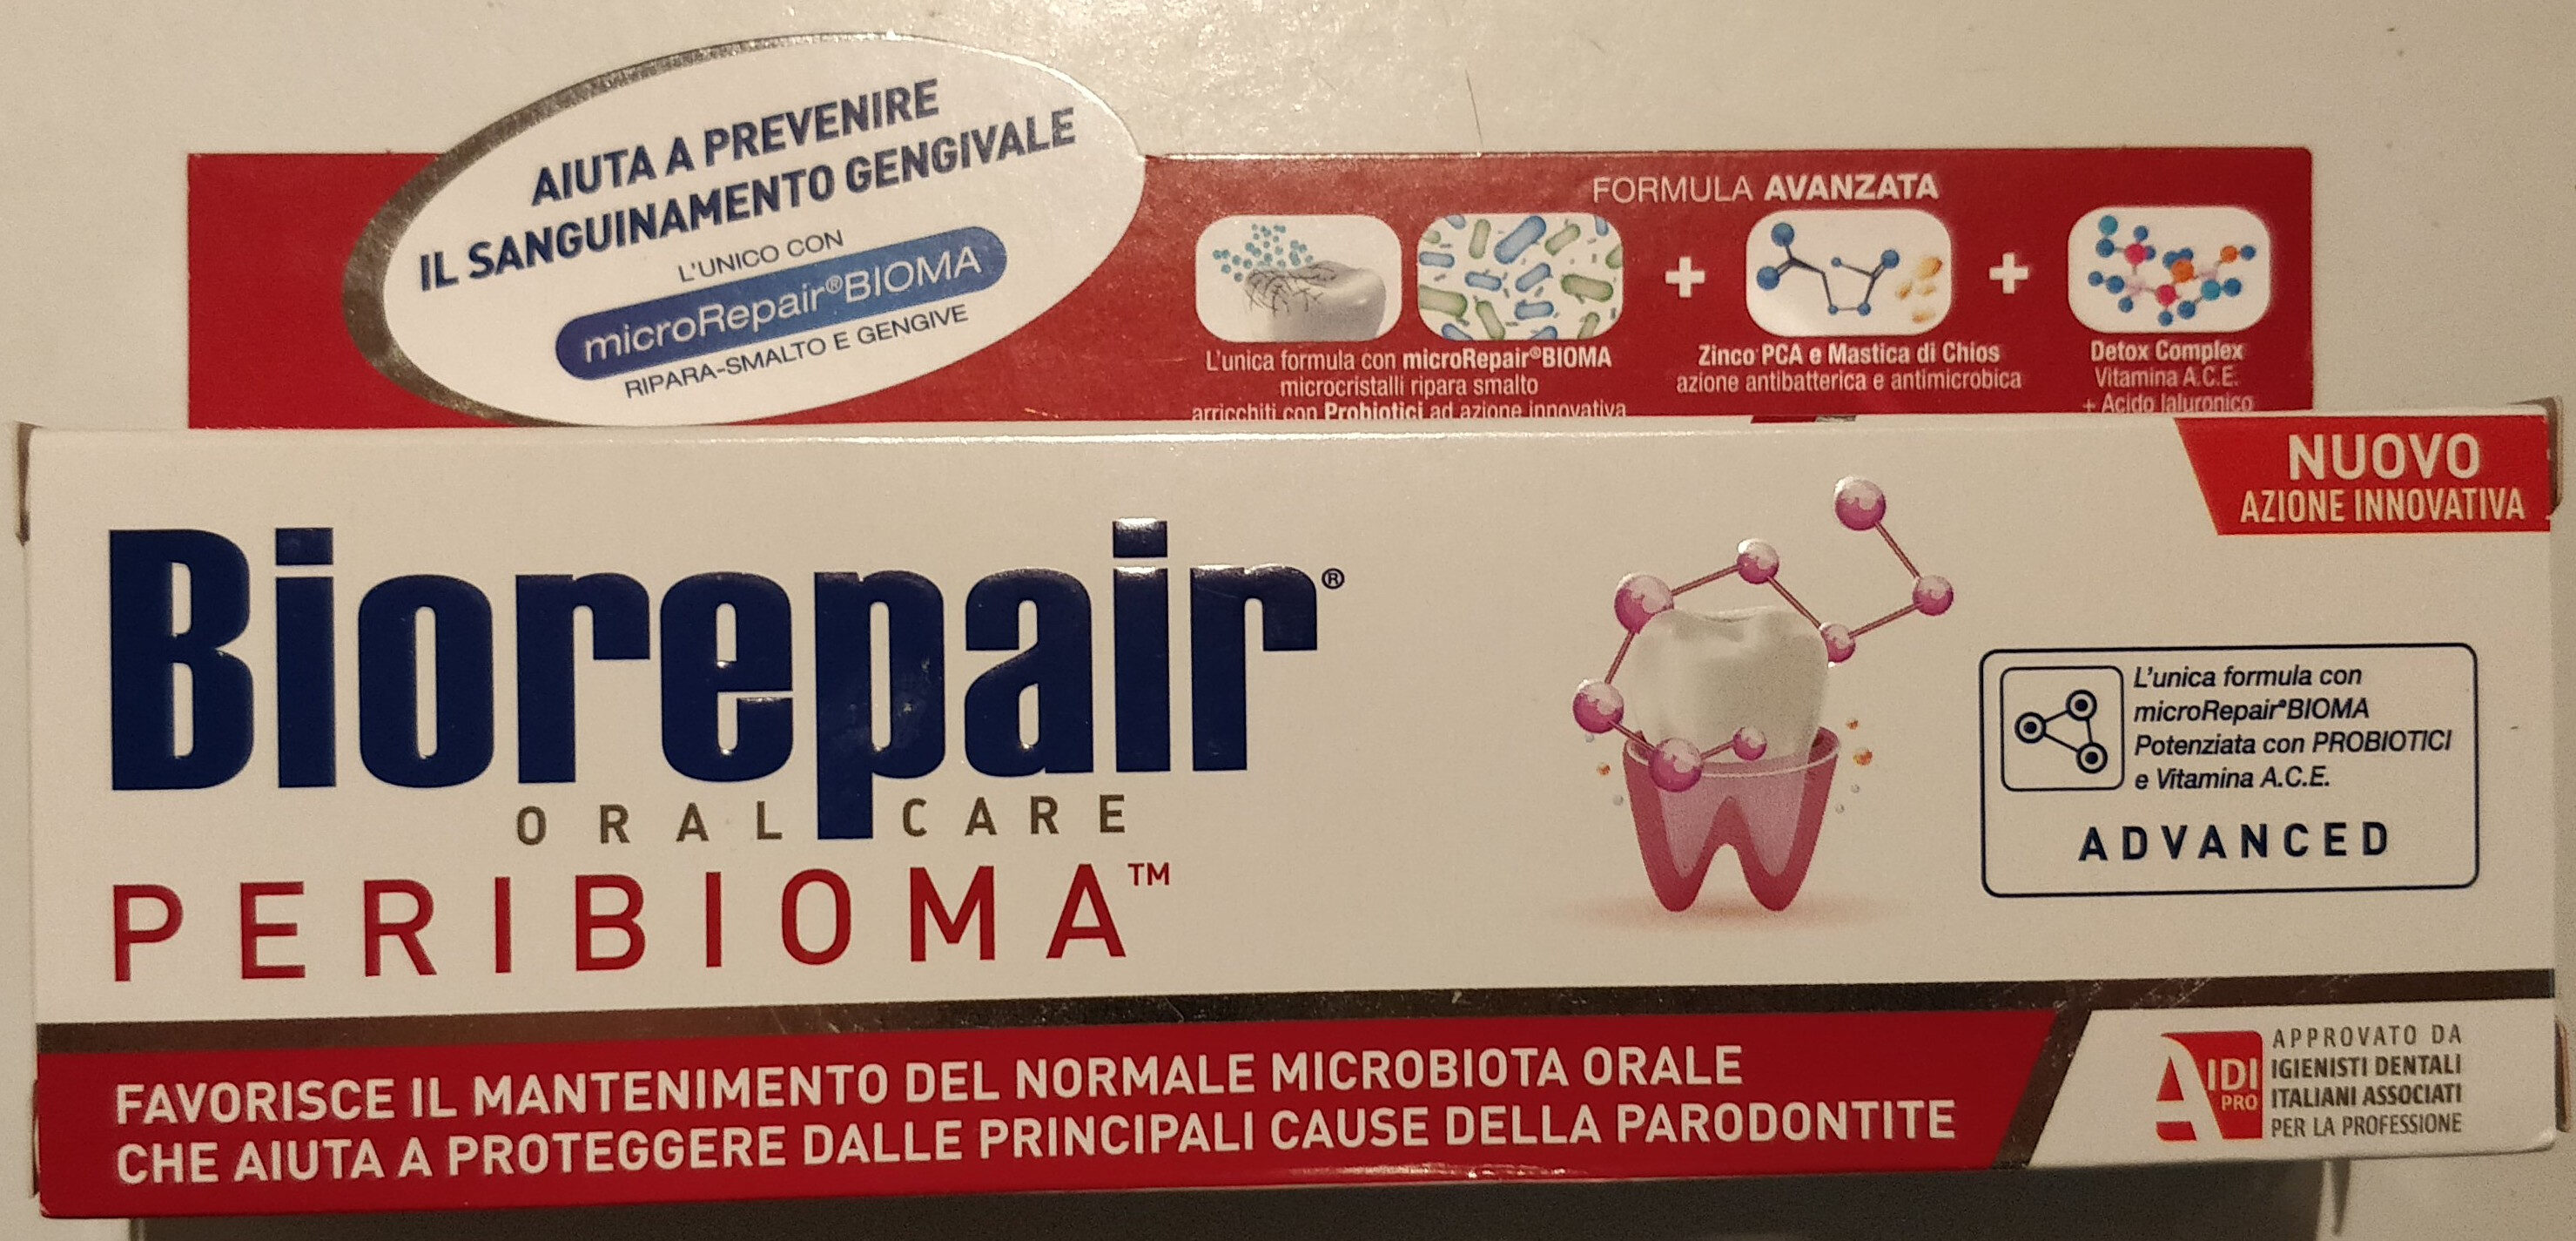 oral care peribioma - Product - it